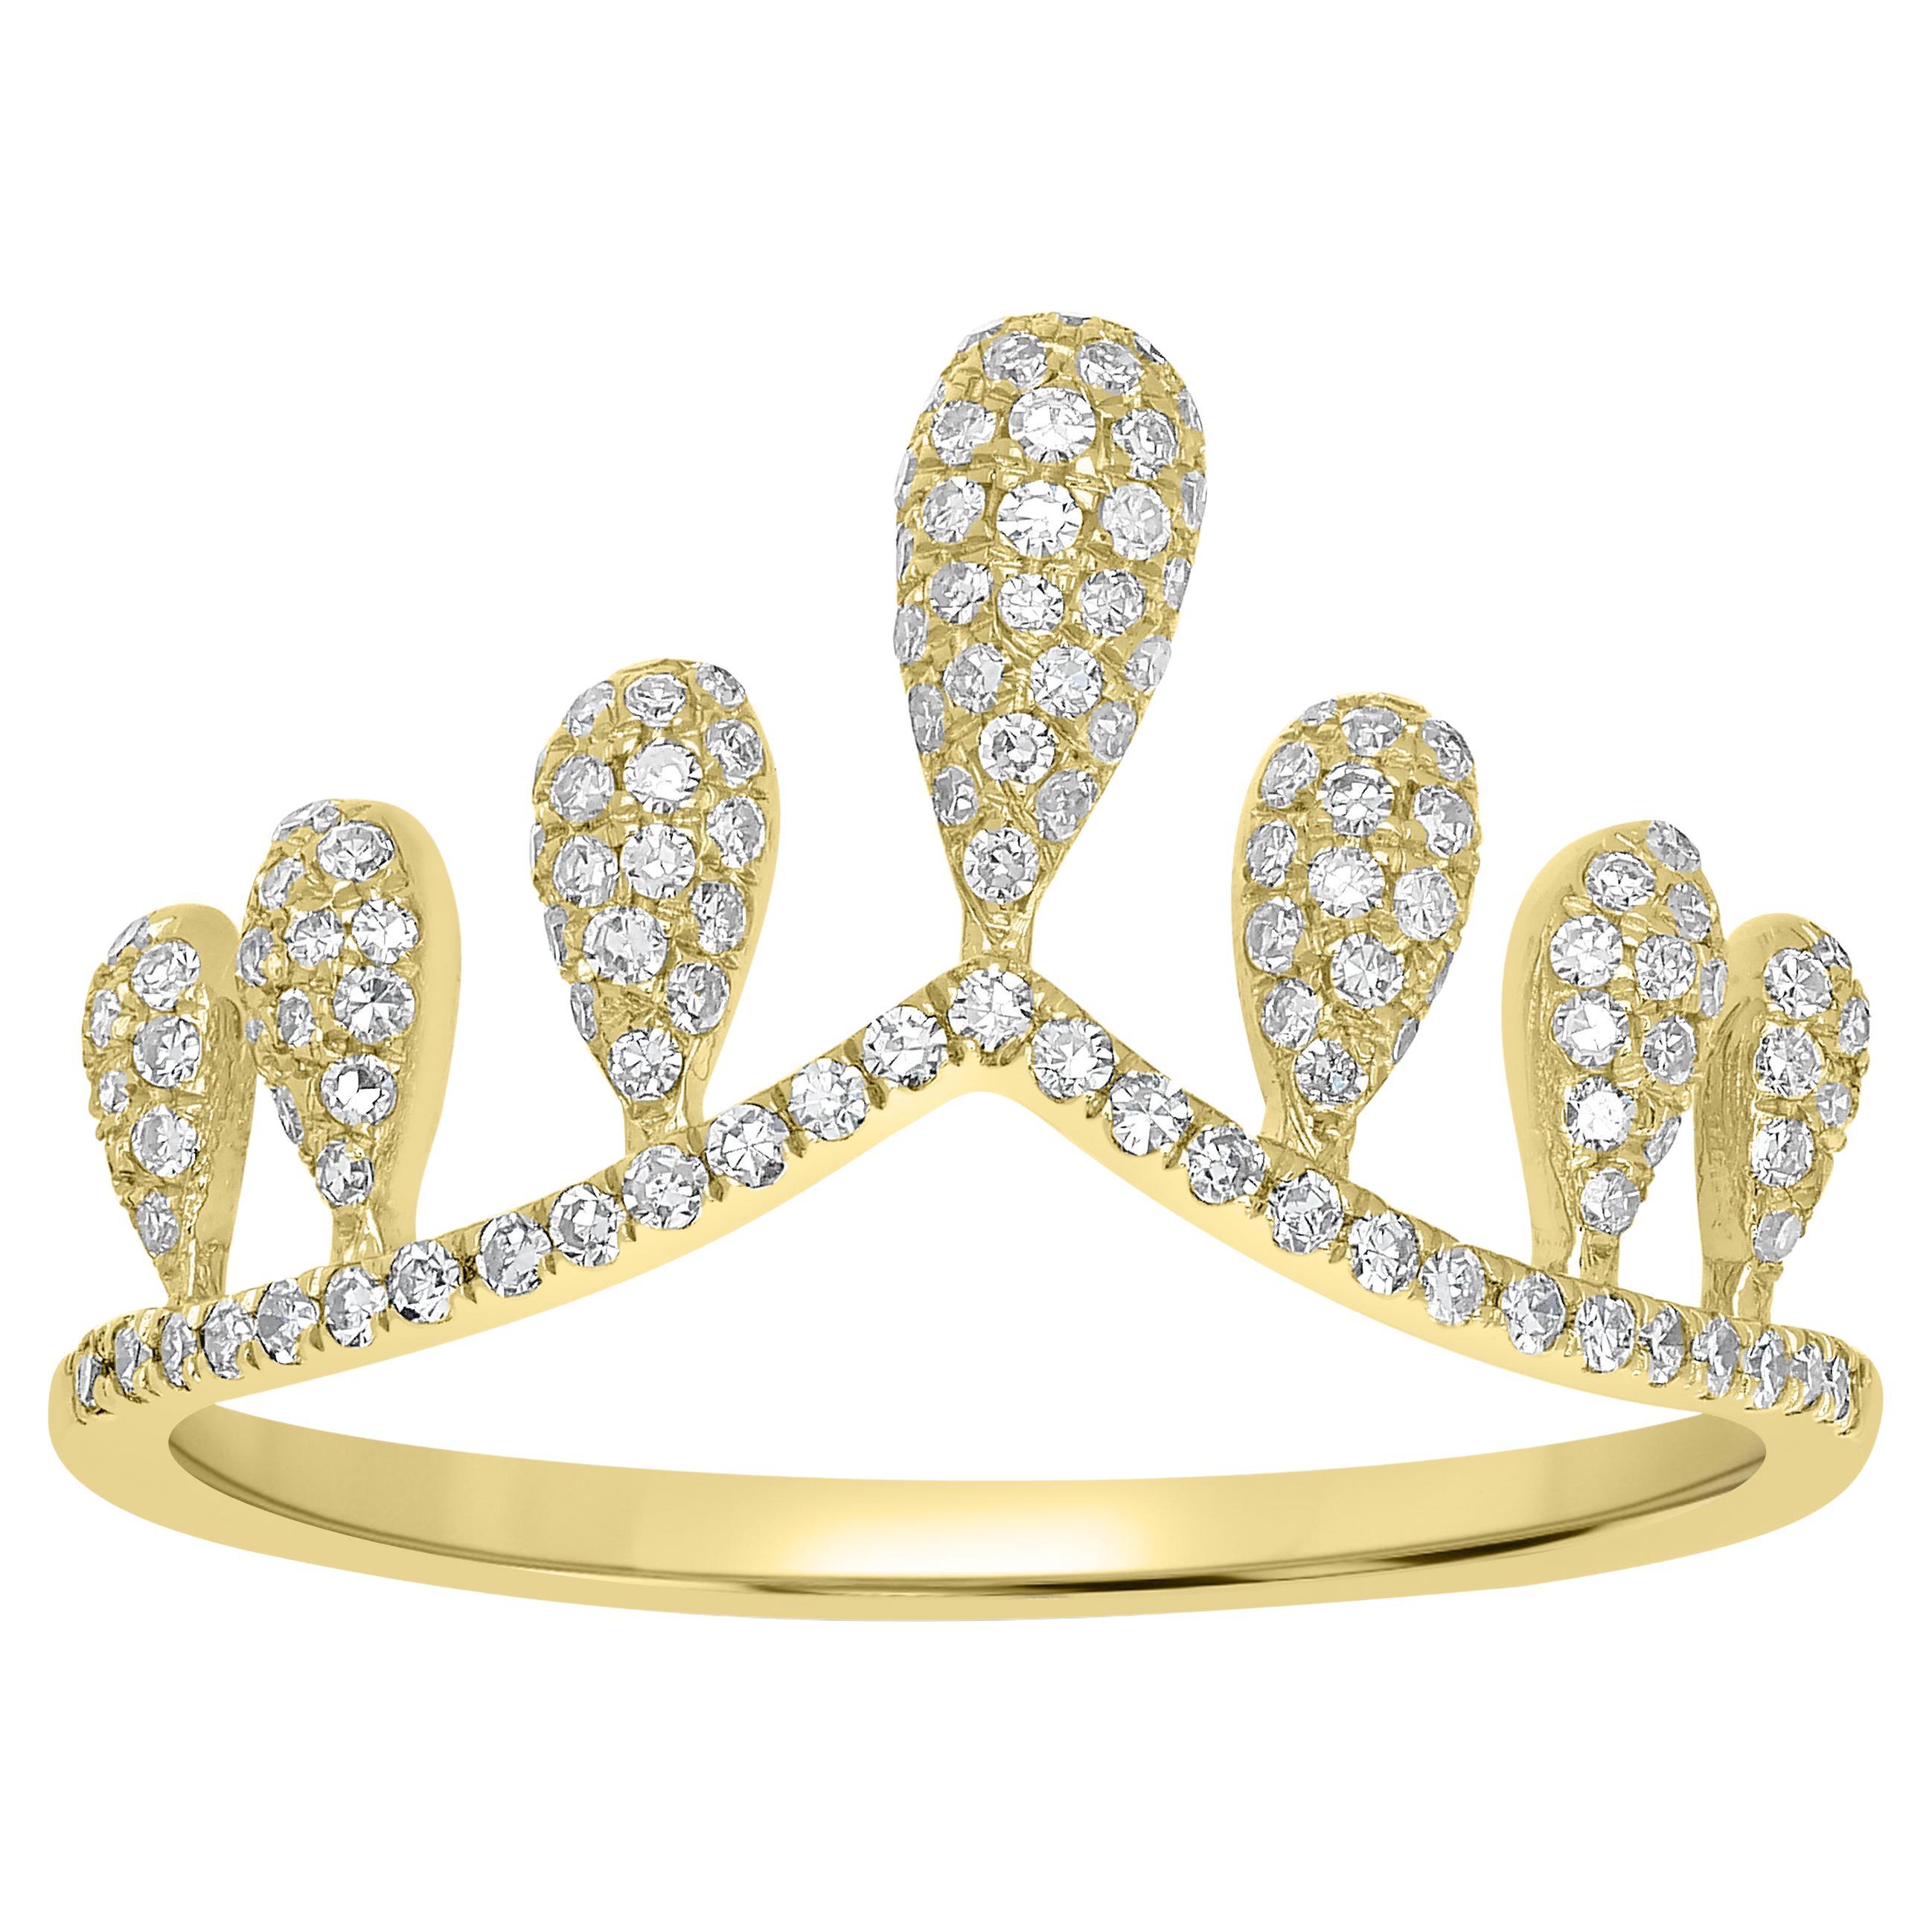 Luxle 14k Gold 3/8 Carat T.W. Diamond Crown Ring For Sale